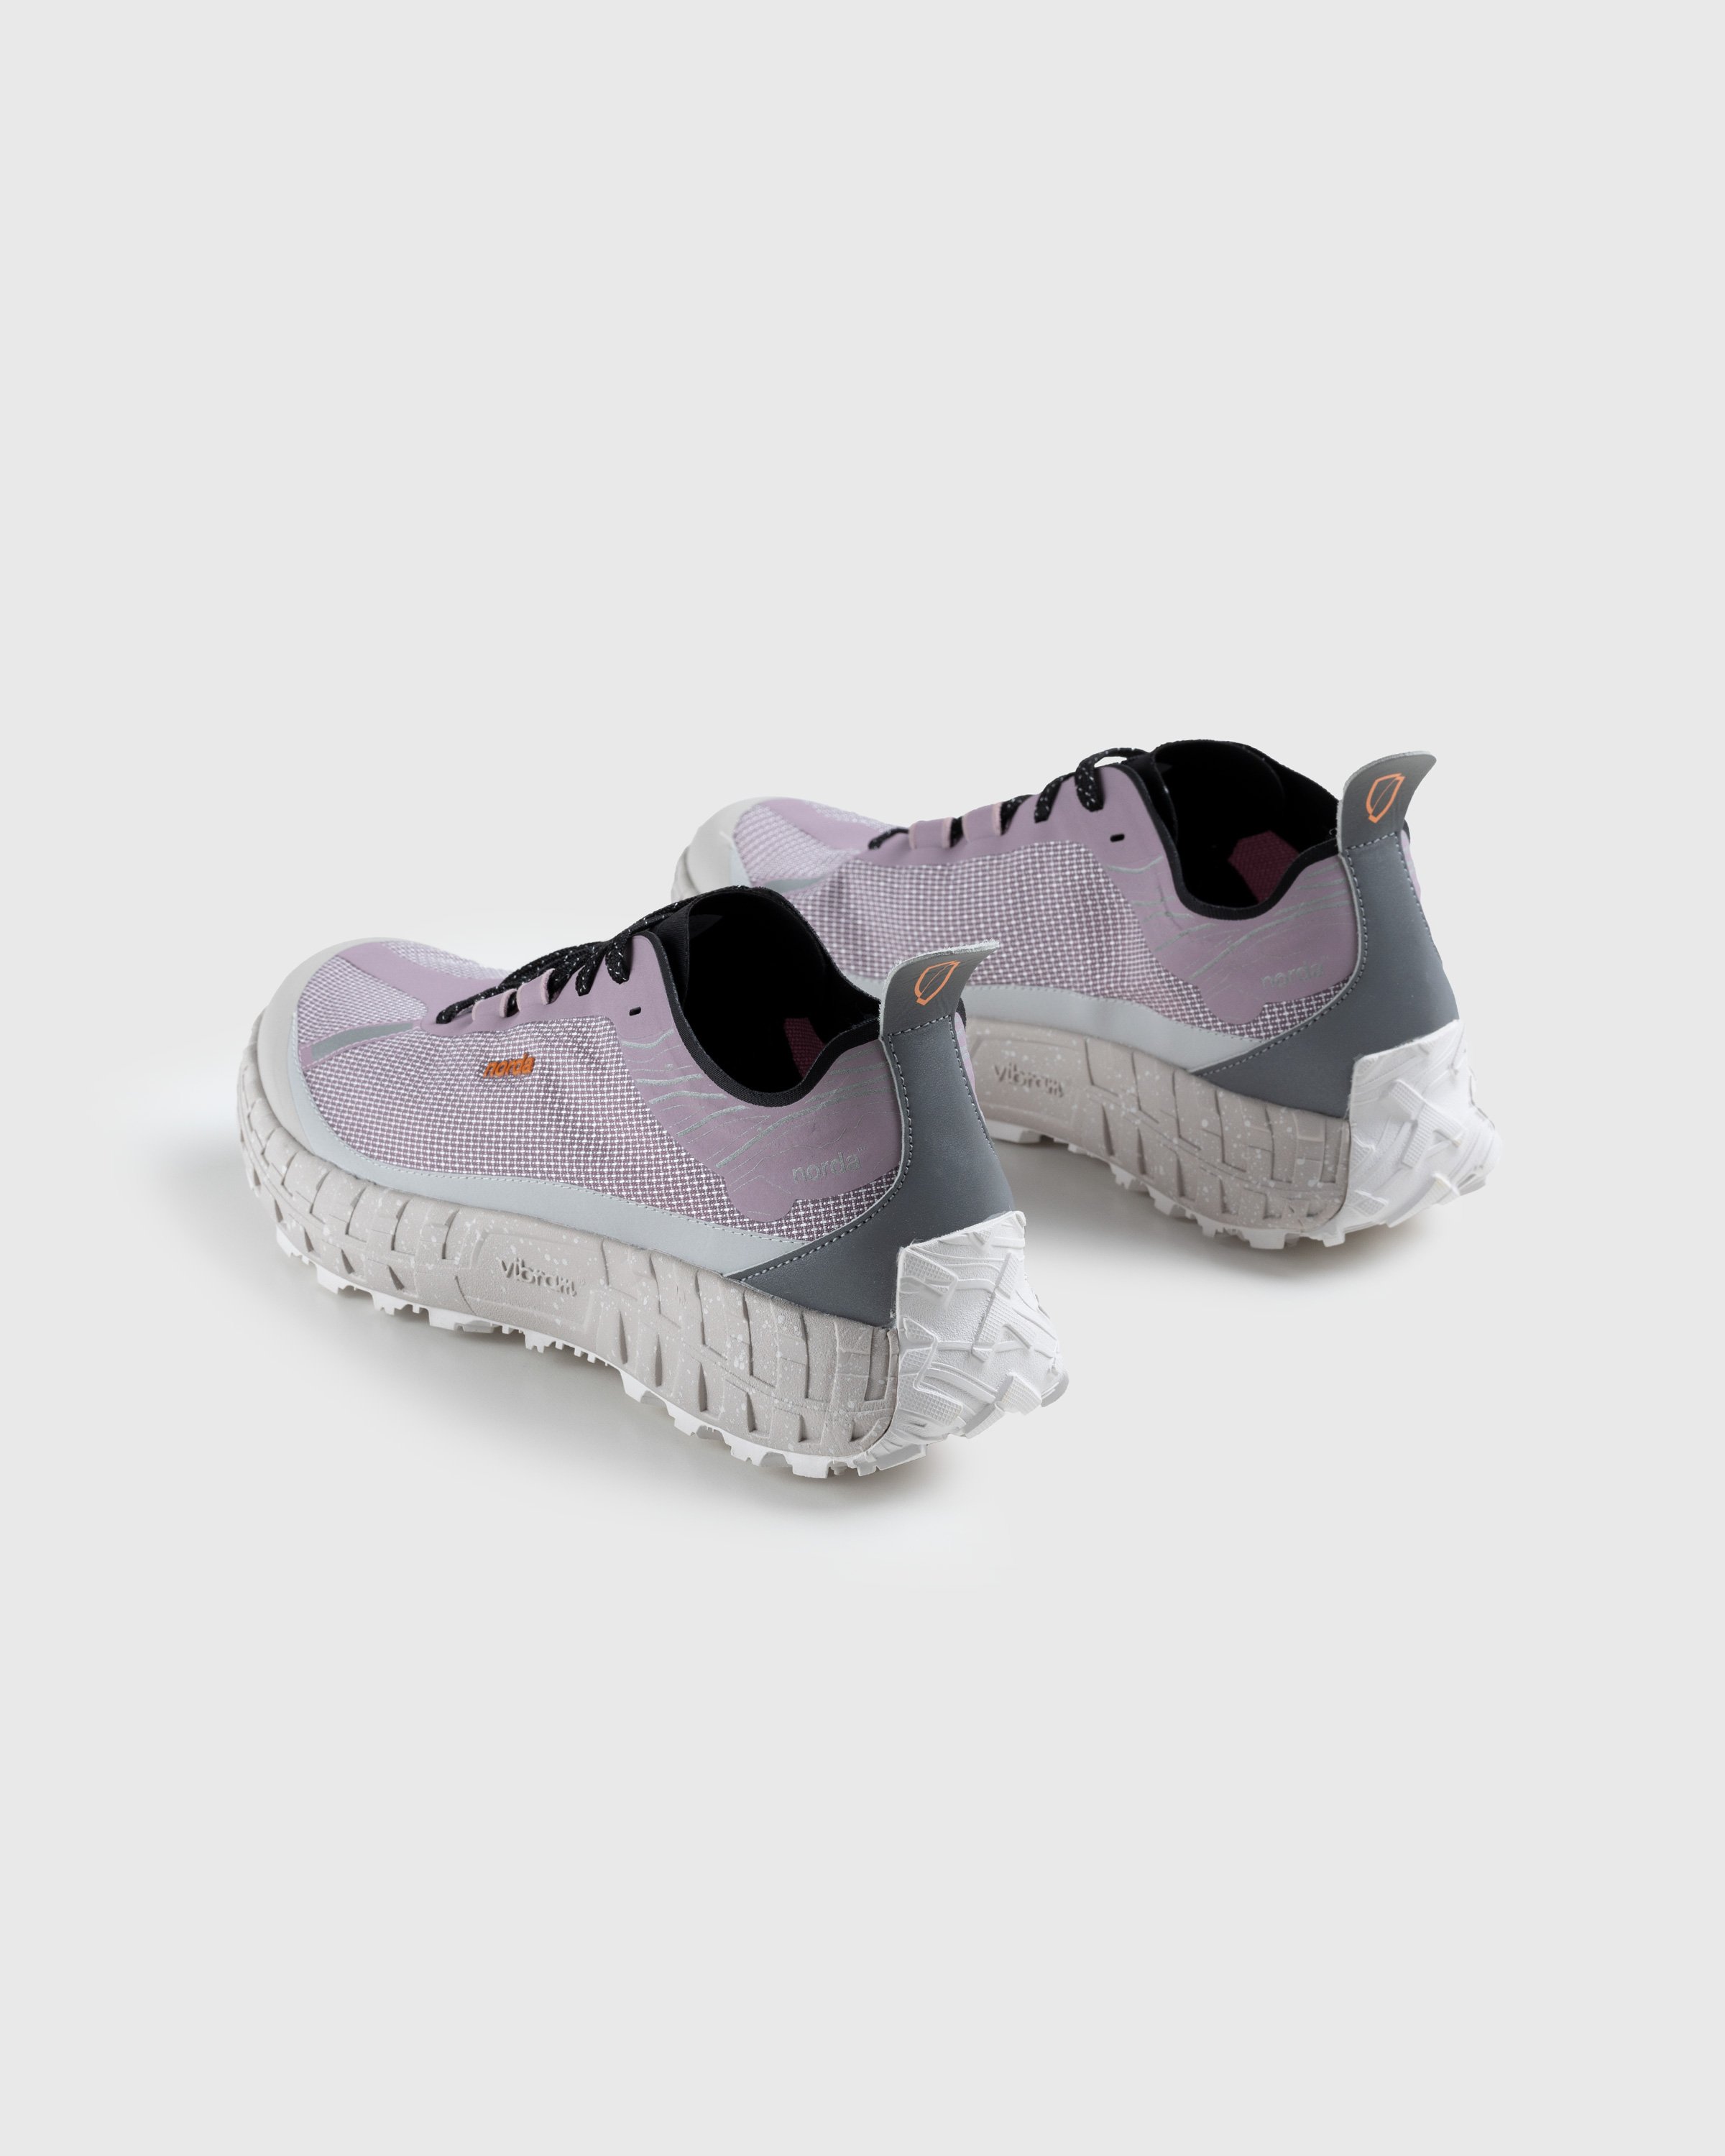 Norda - 001 W LTD Edition Lilac - Footwear - Purple - Image 4